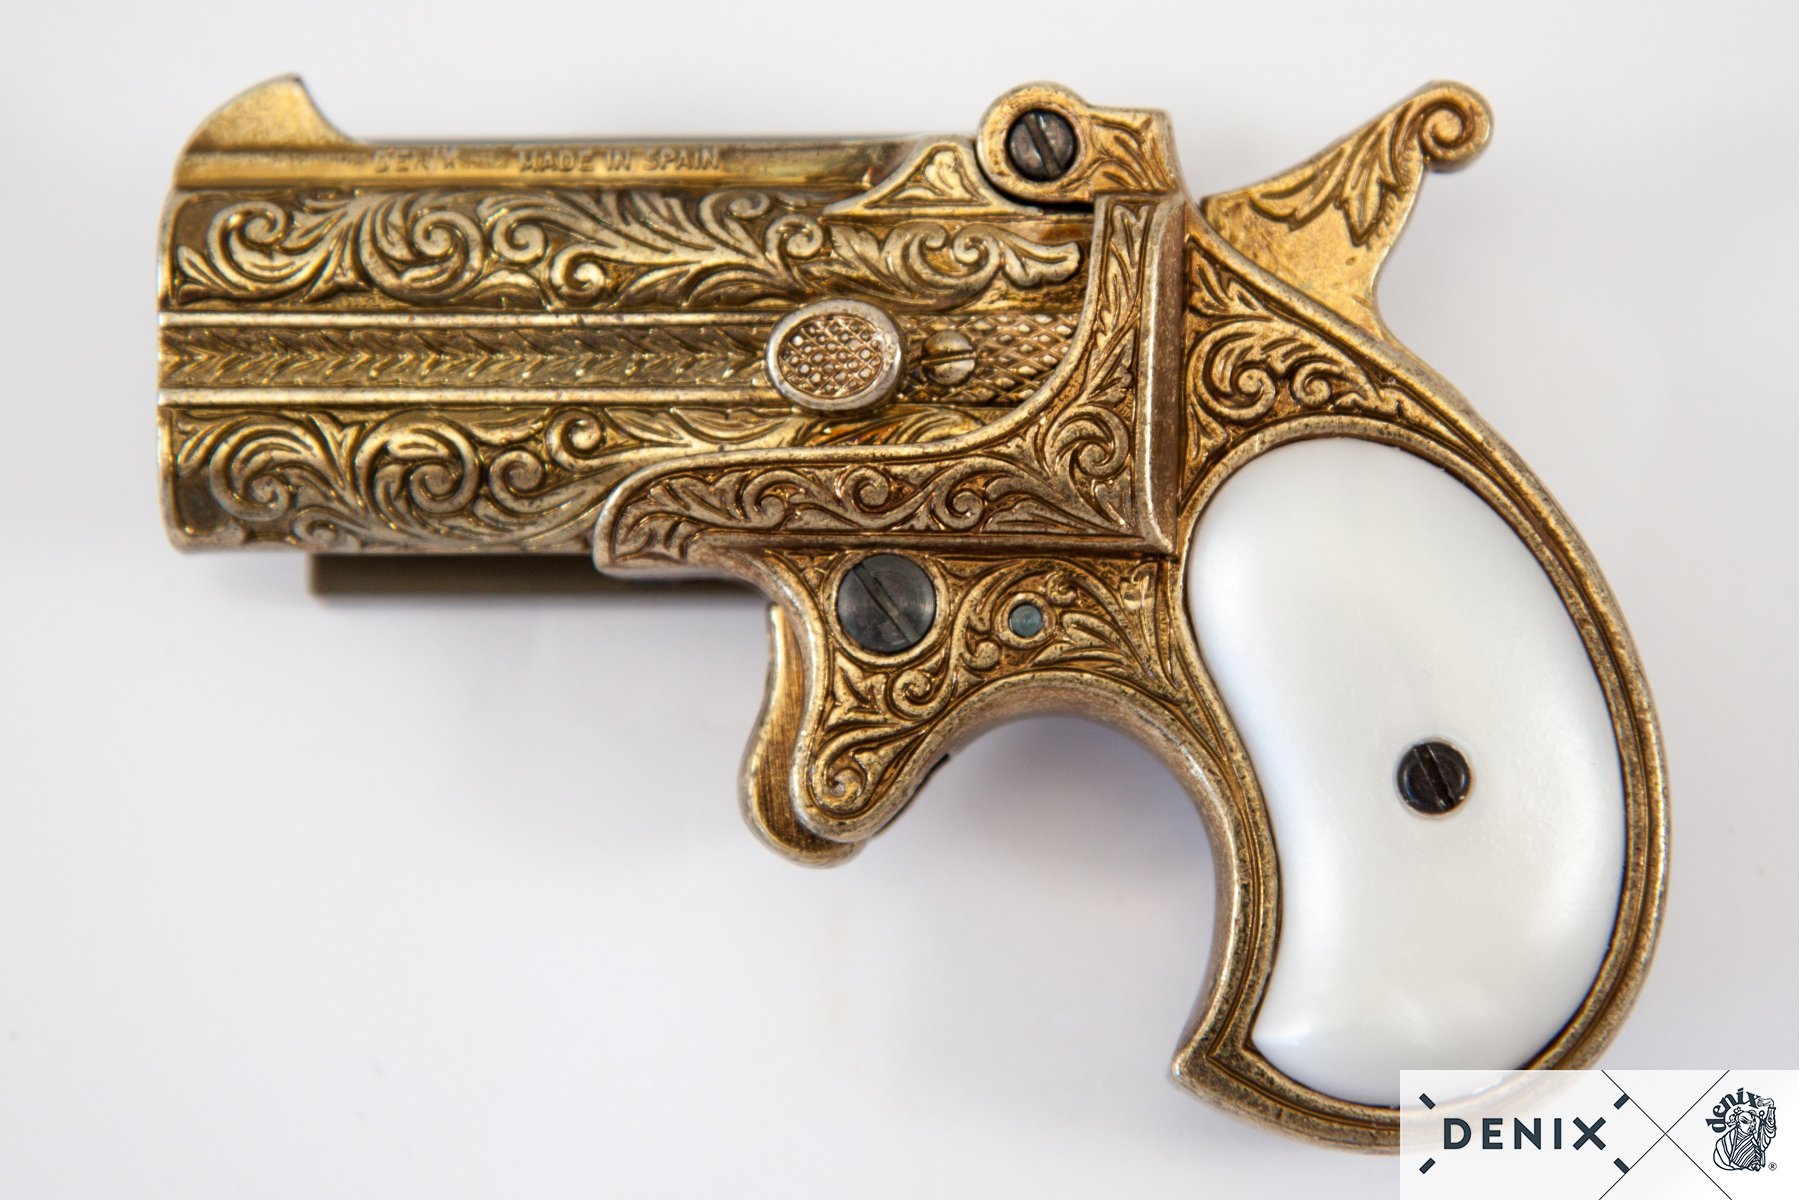 Derringer pistol, USA 1866 - Pistols - Western and American Civil War